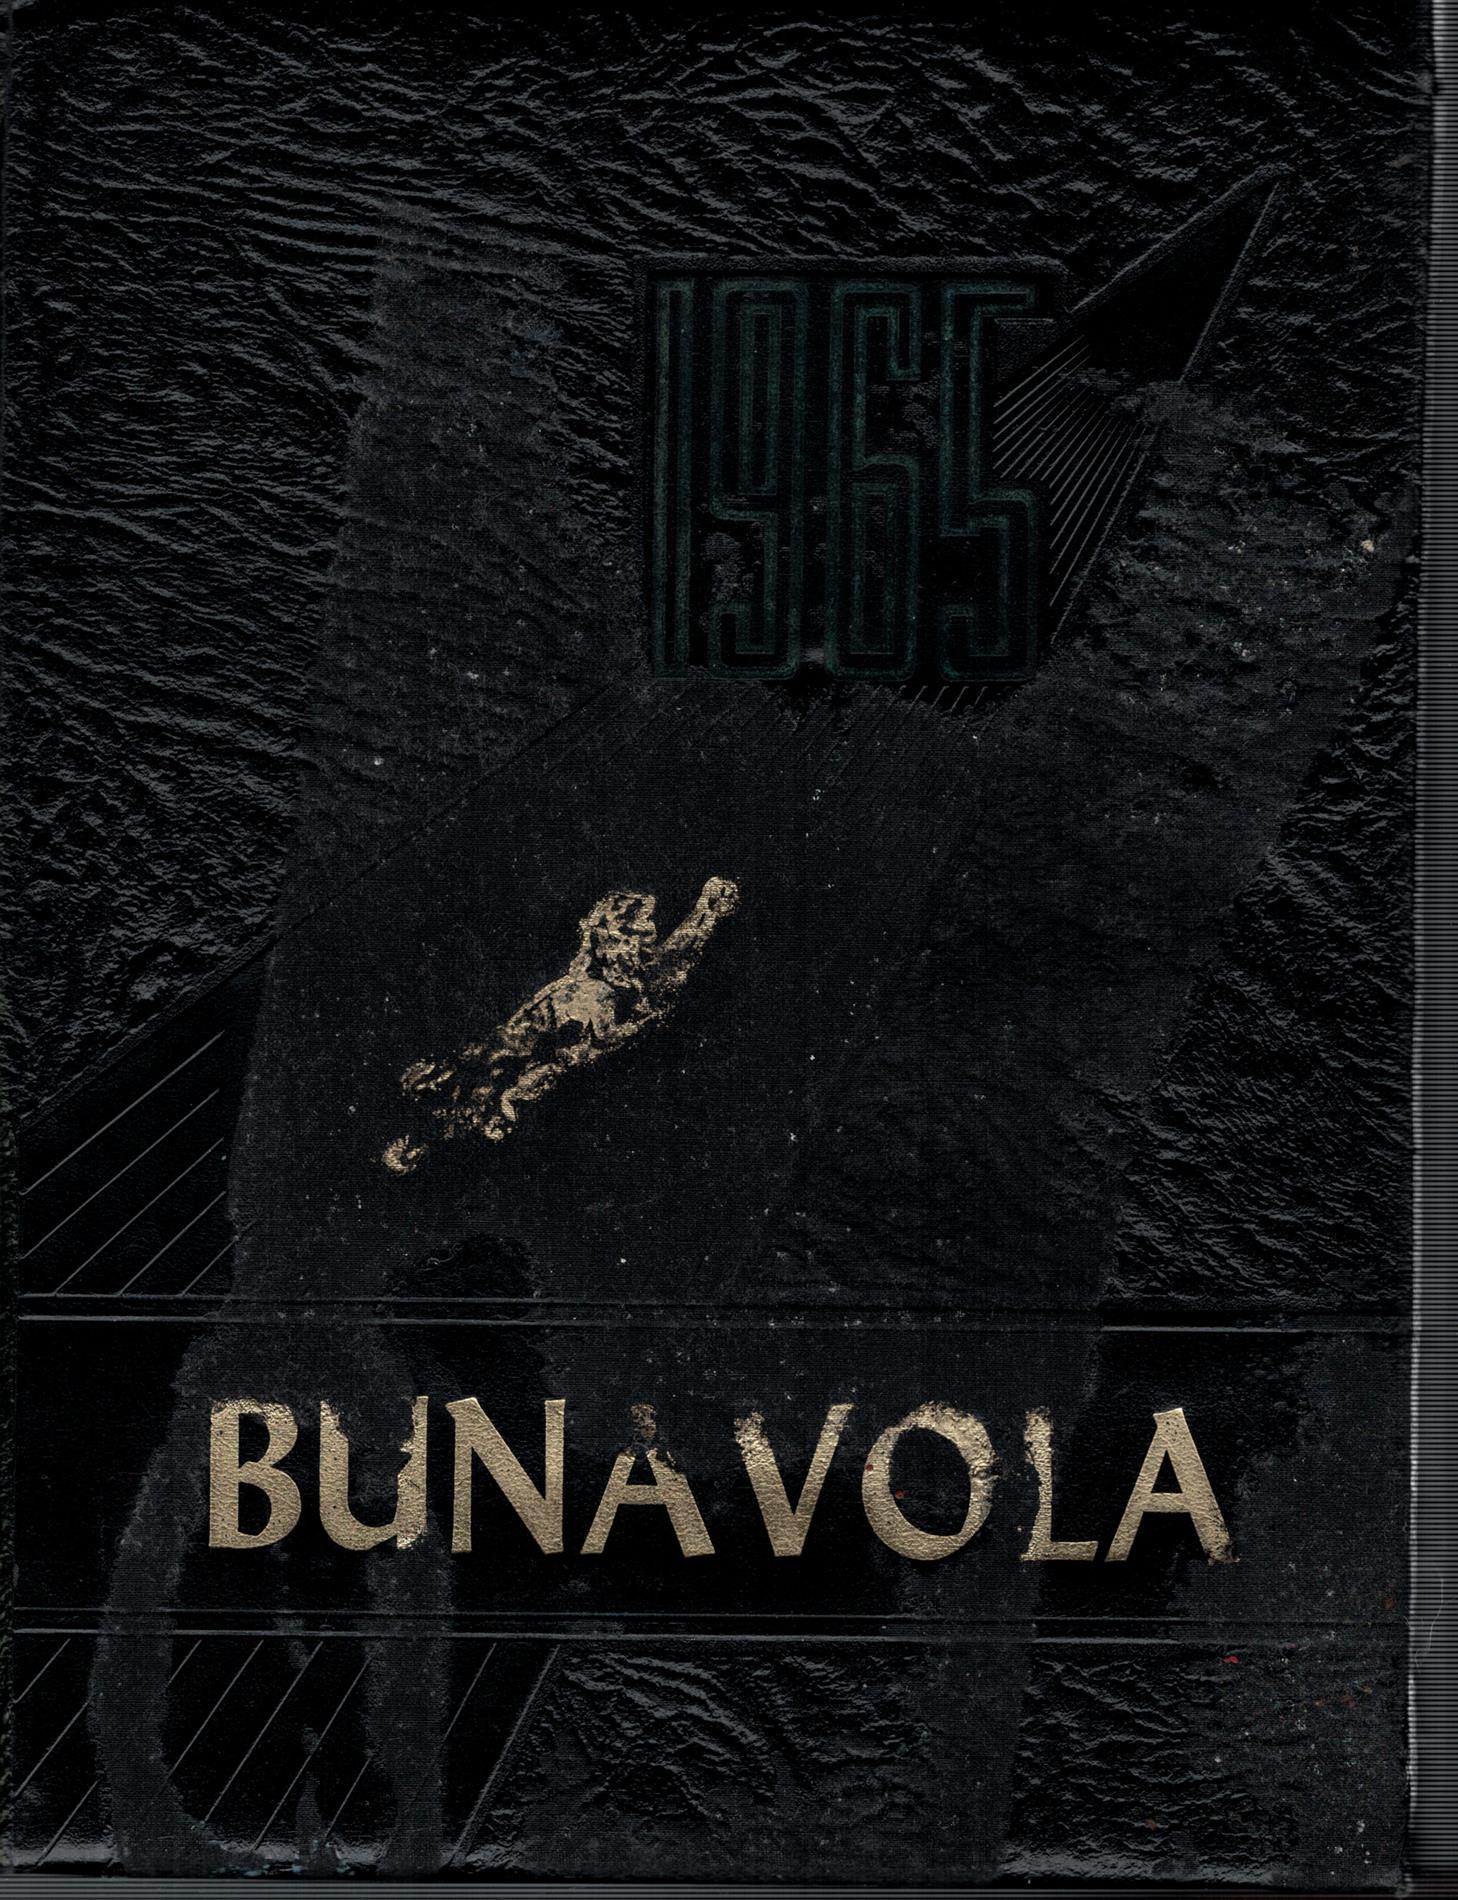 1965 Bunavola